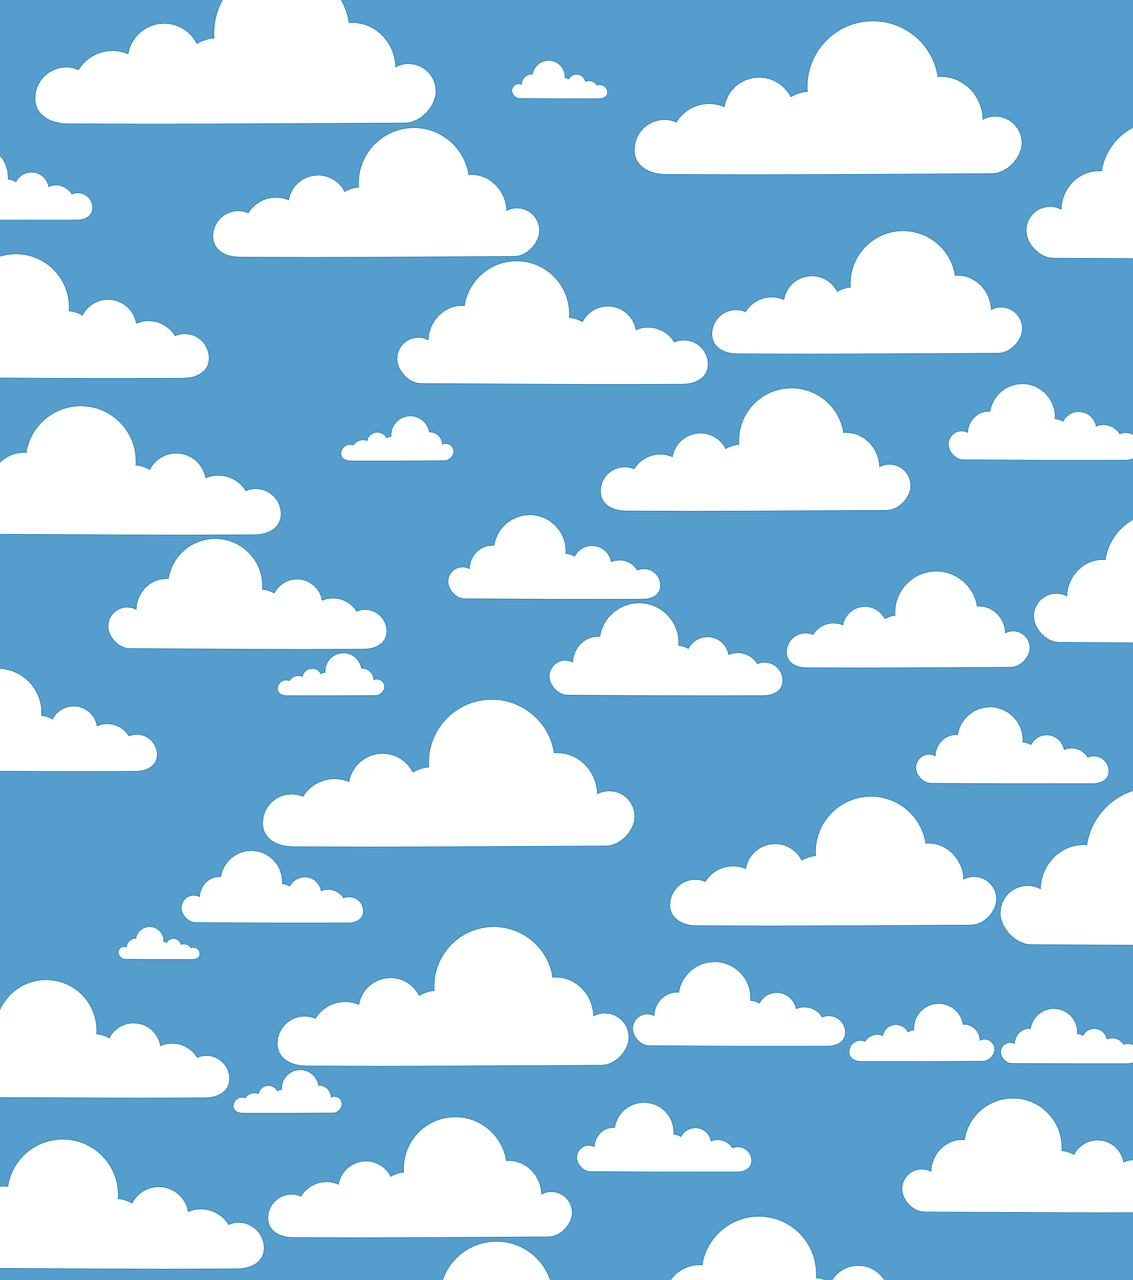 Cloud graphics